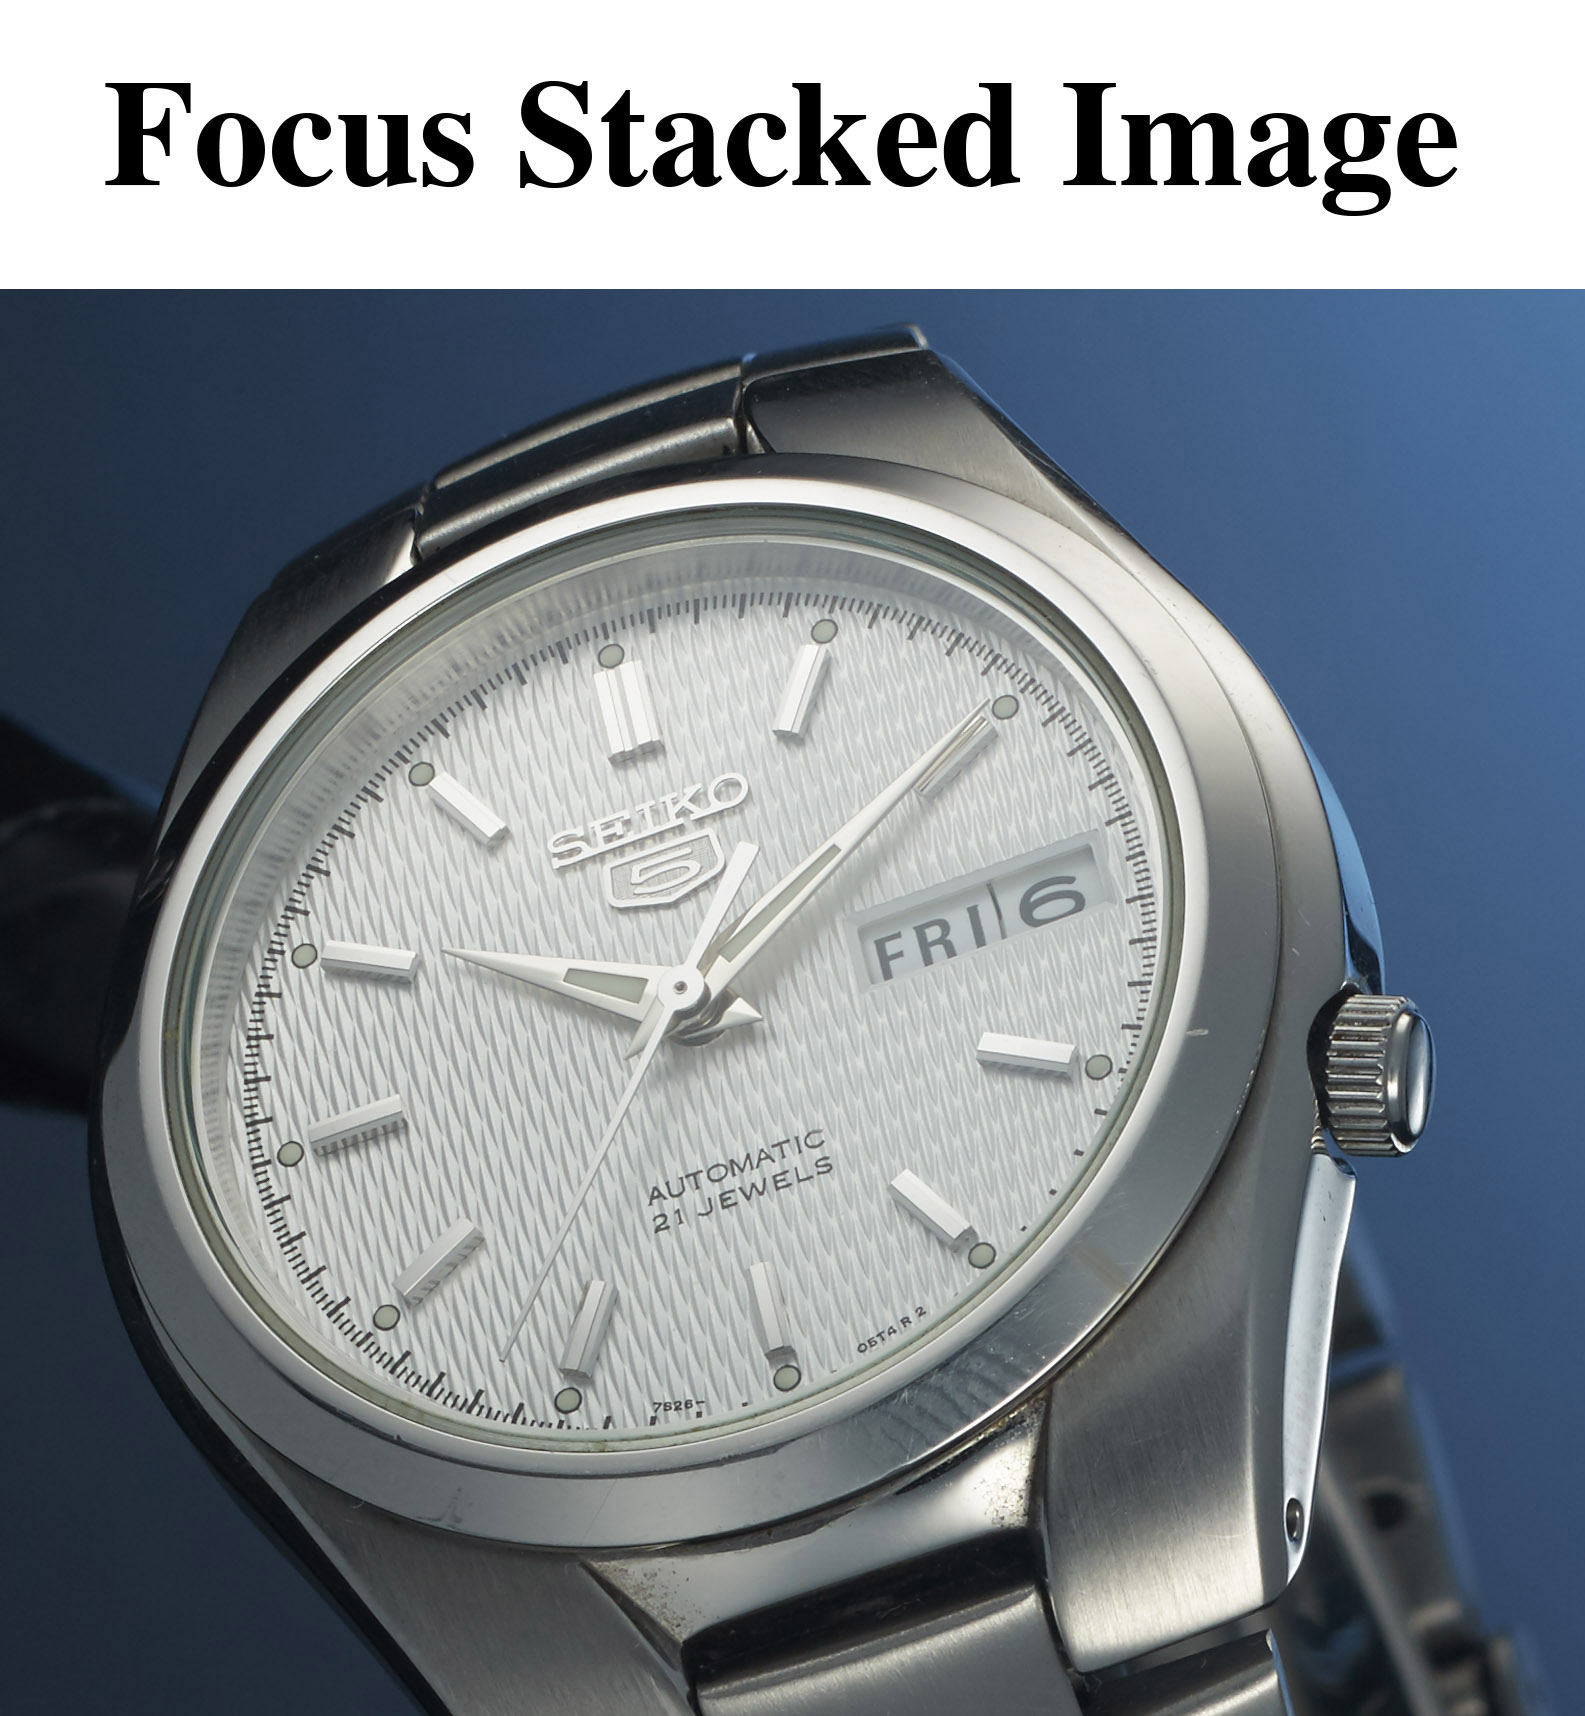 Focus Stack 001a.jpg